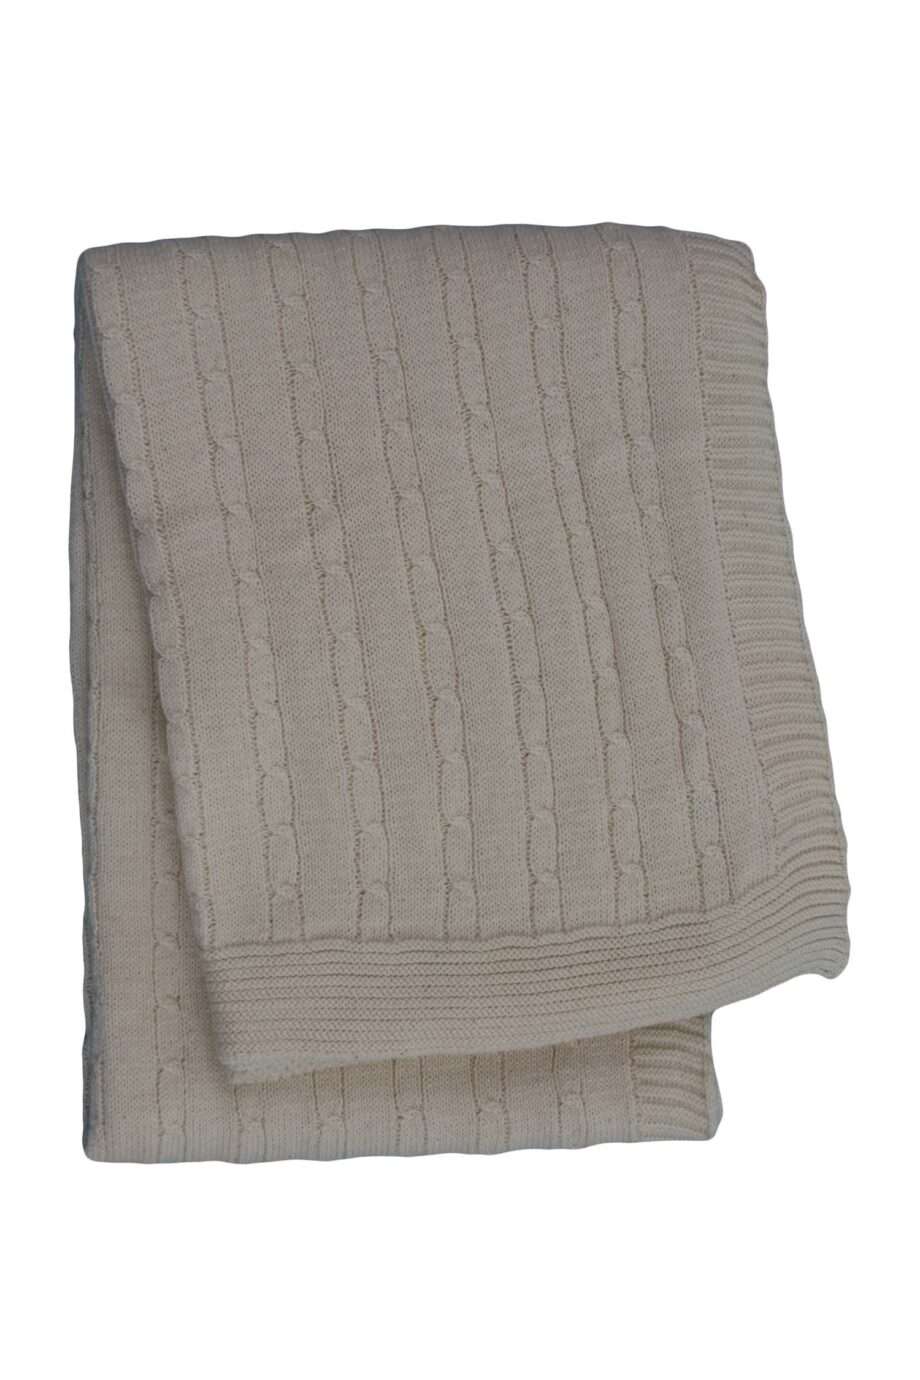 twist small linen knitted cotton little blanket medium